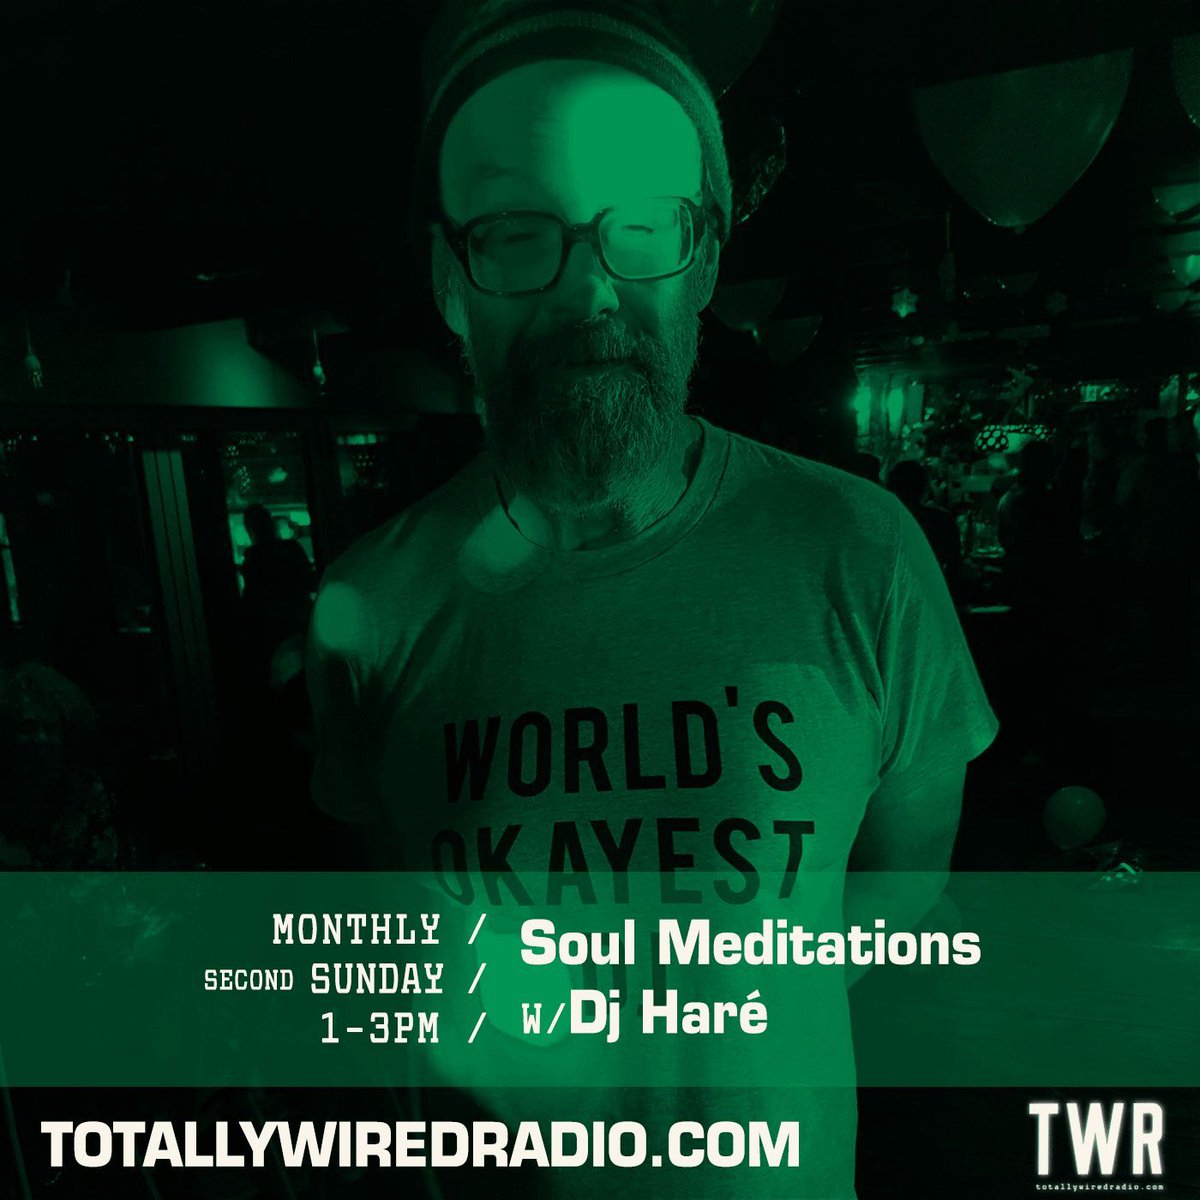 Soul Meditations w/ Dj Haré #startingsoon on #TotallyWiredRadio Listen @ Link in bio. - #MusicIsLife #London #Portugal - #Soul #Soulful #FunkSoulJazz #ModernSoul #JazzFunk